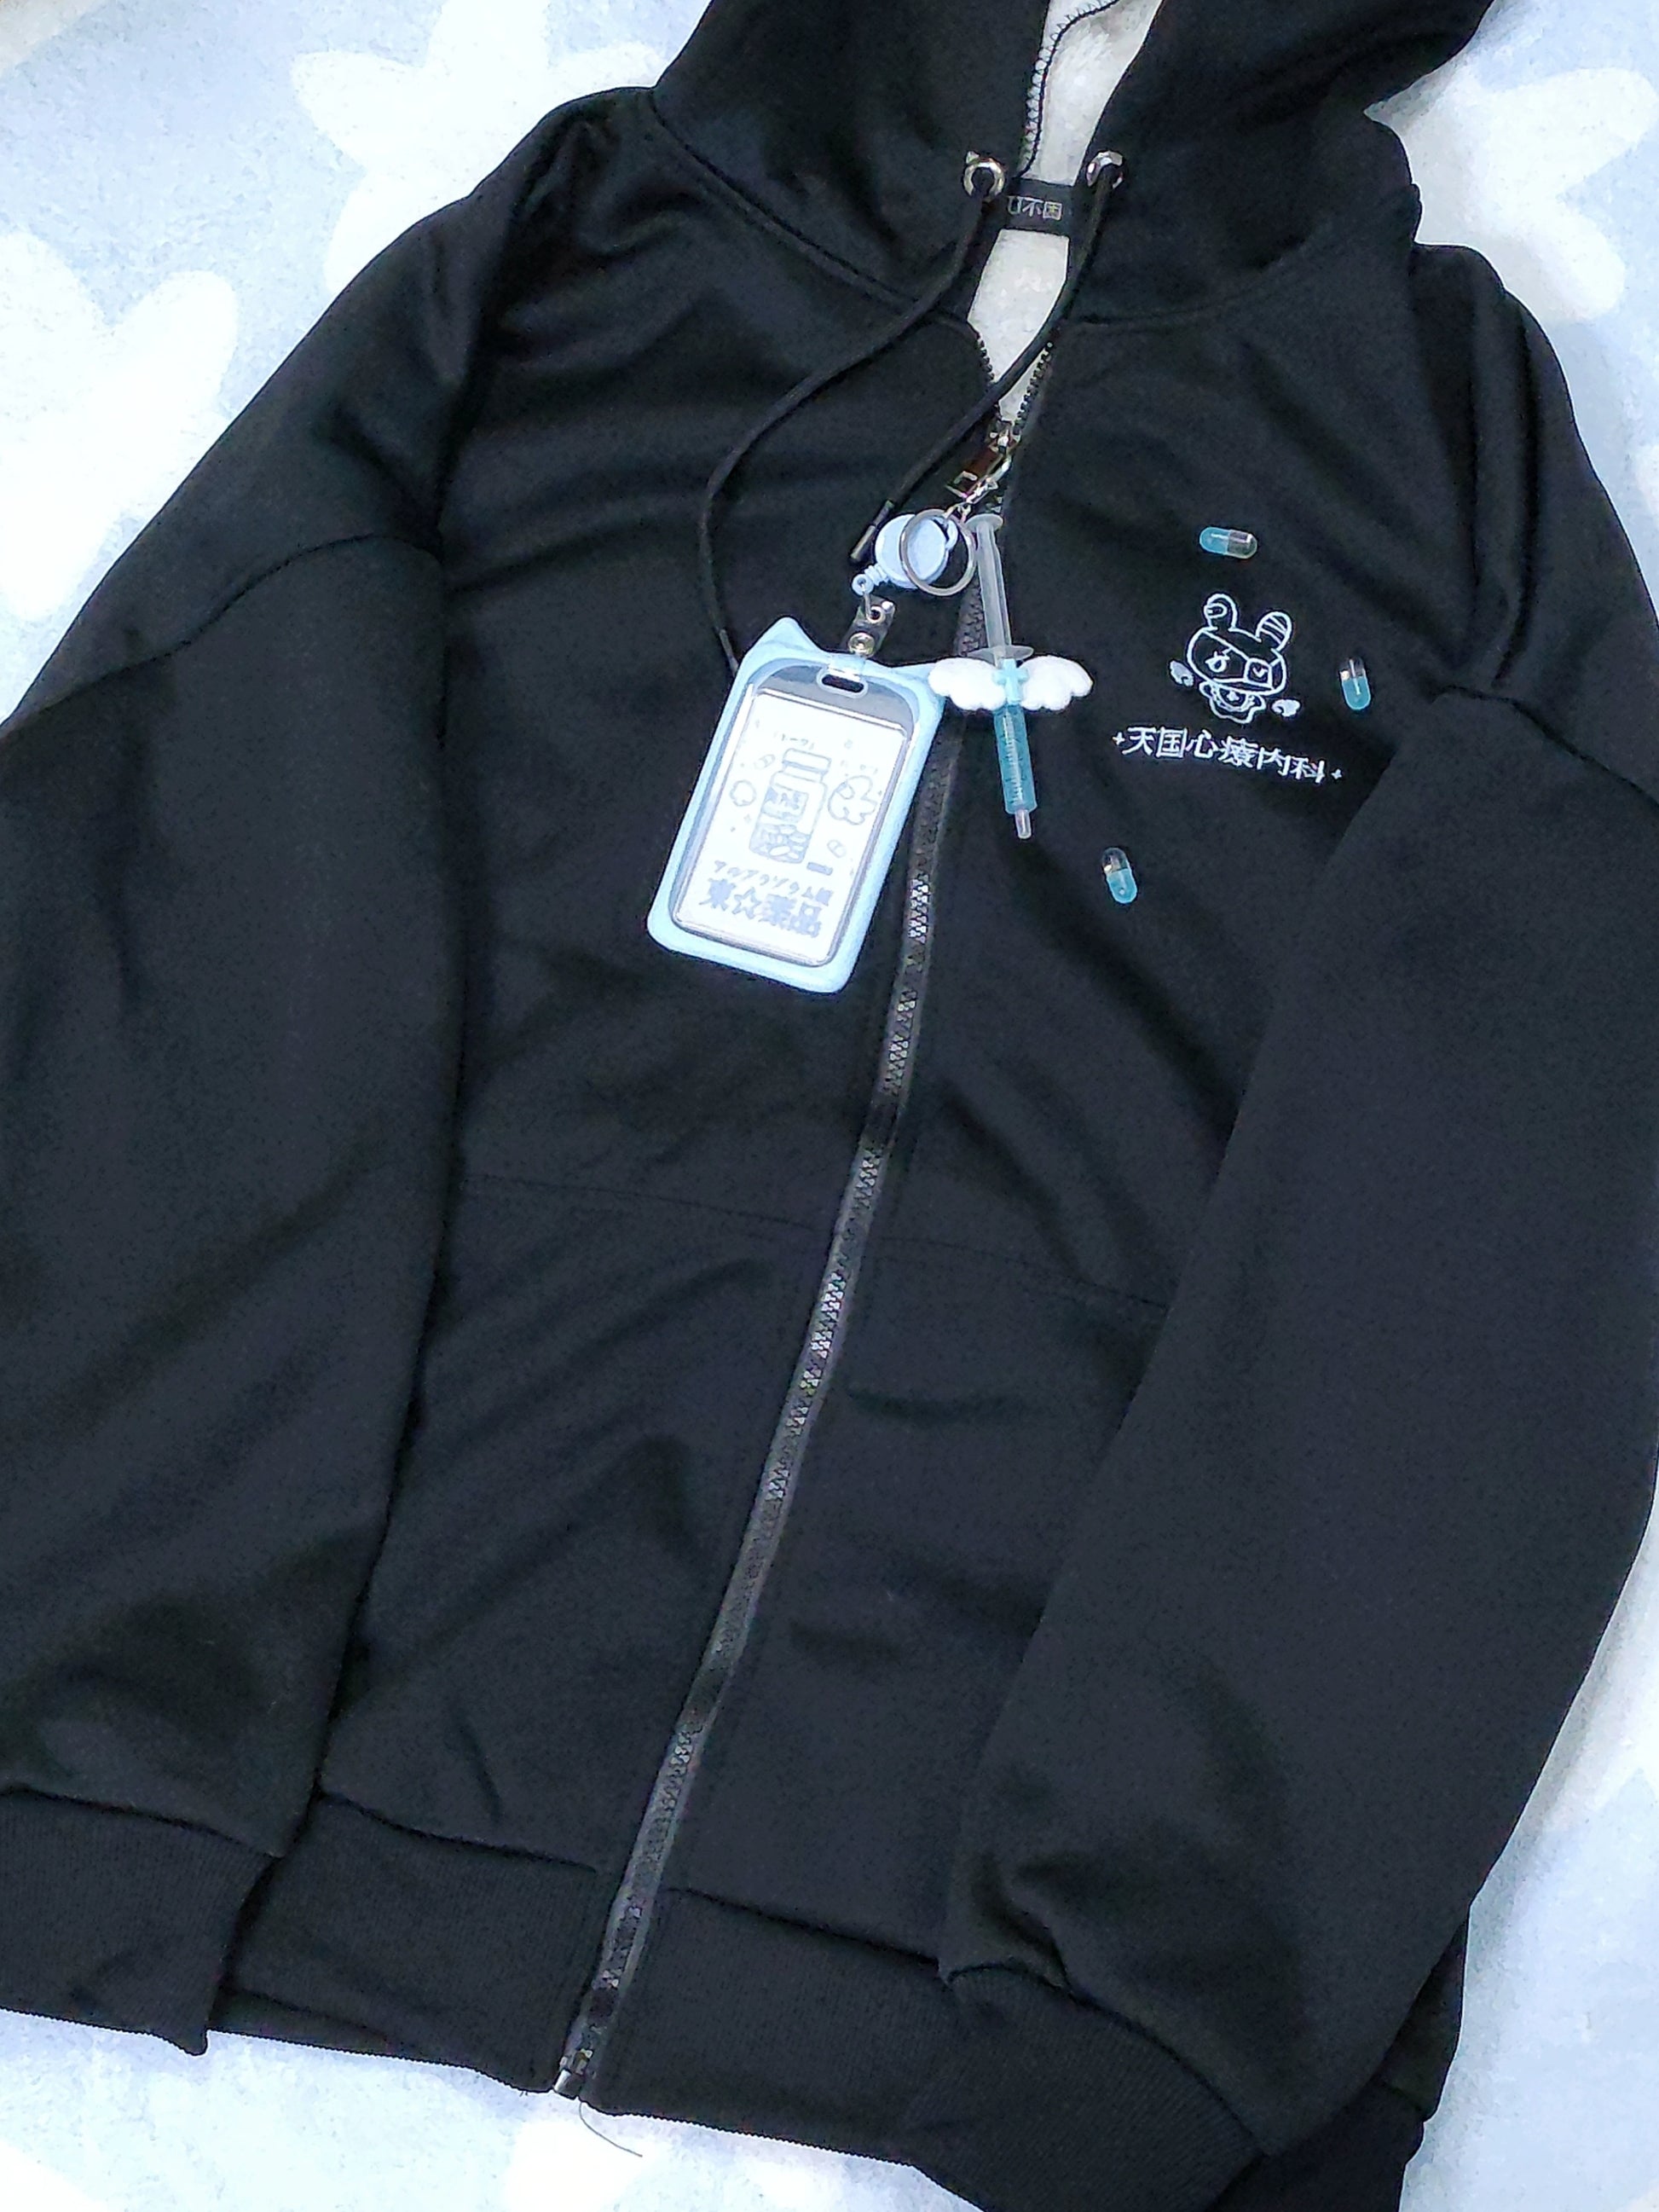 Jirai Kei Fleece Hoodie Black Gray Embroidery Winter Coat 32928:408780